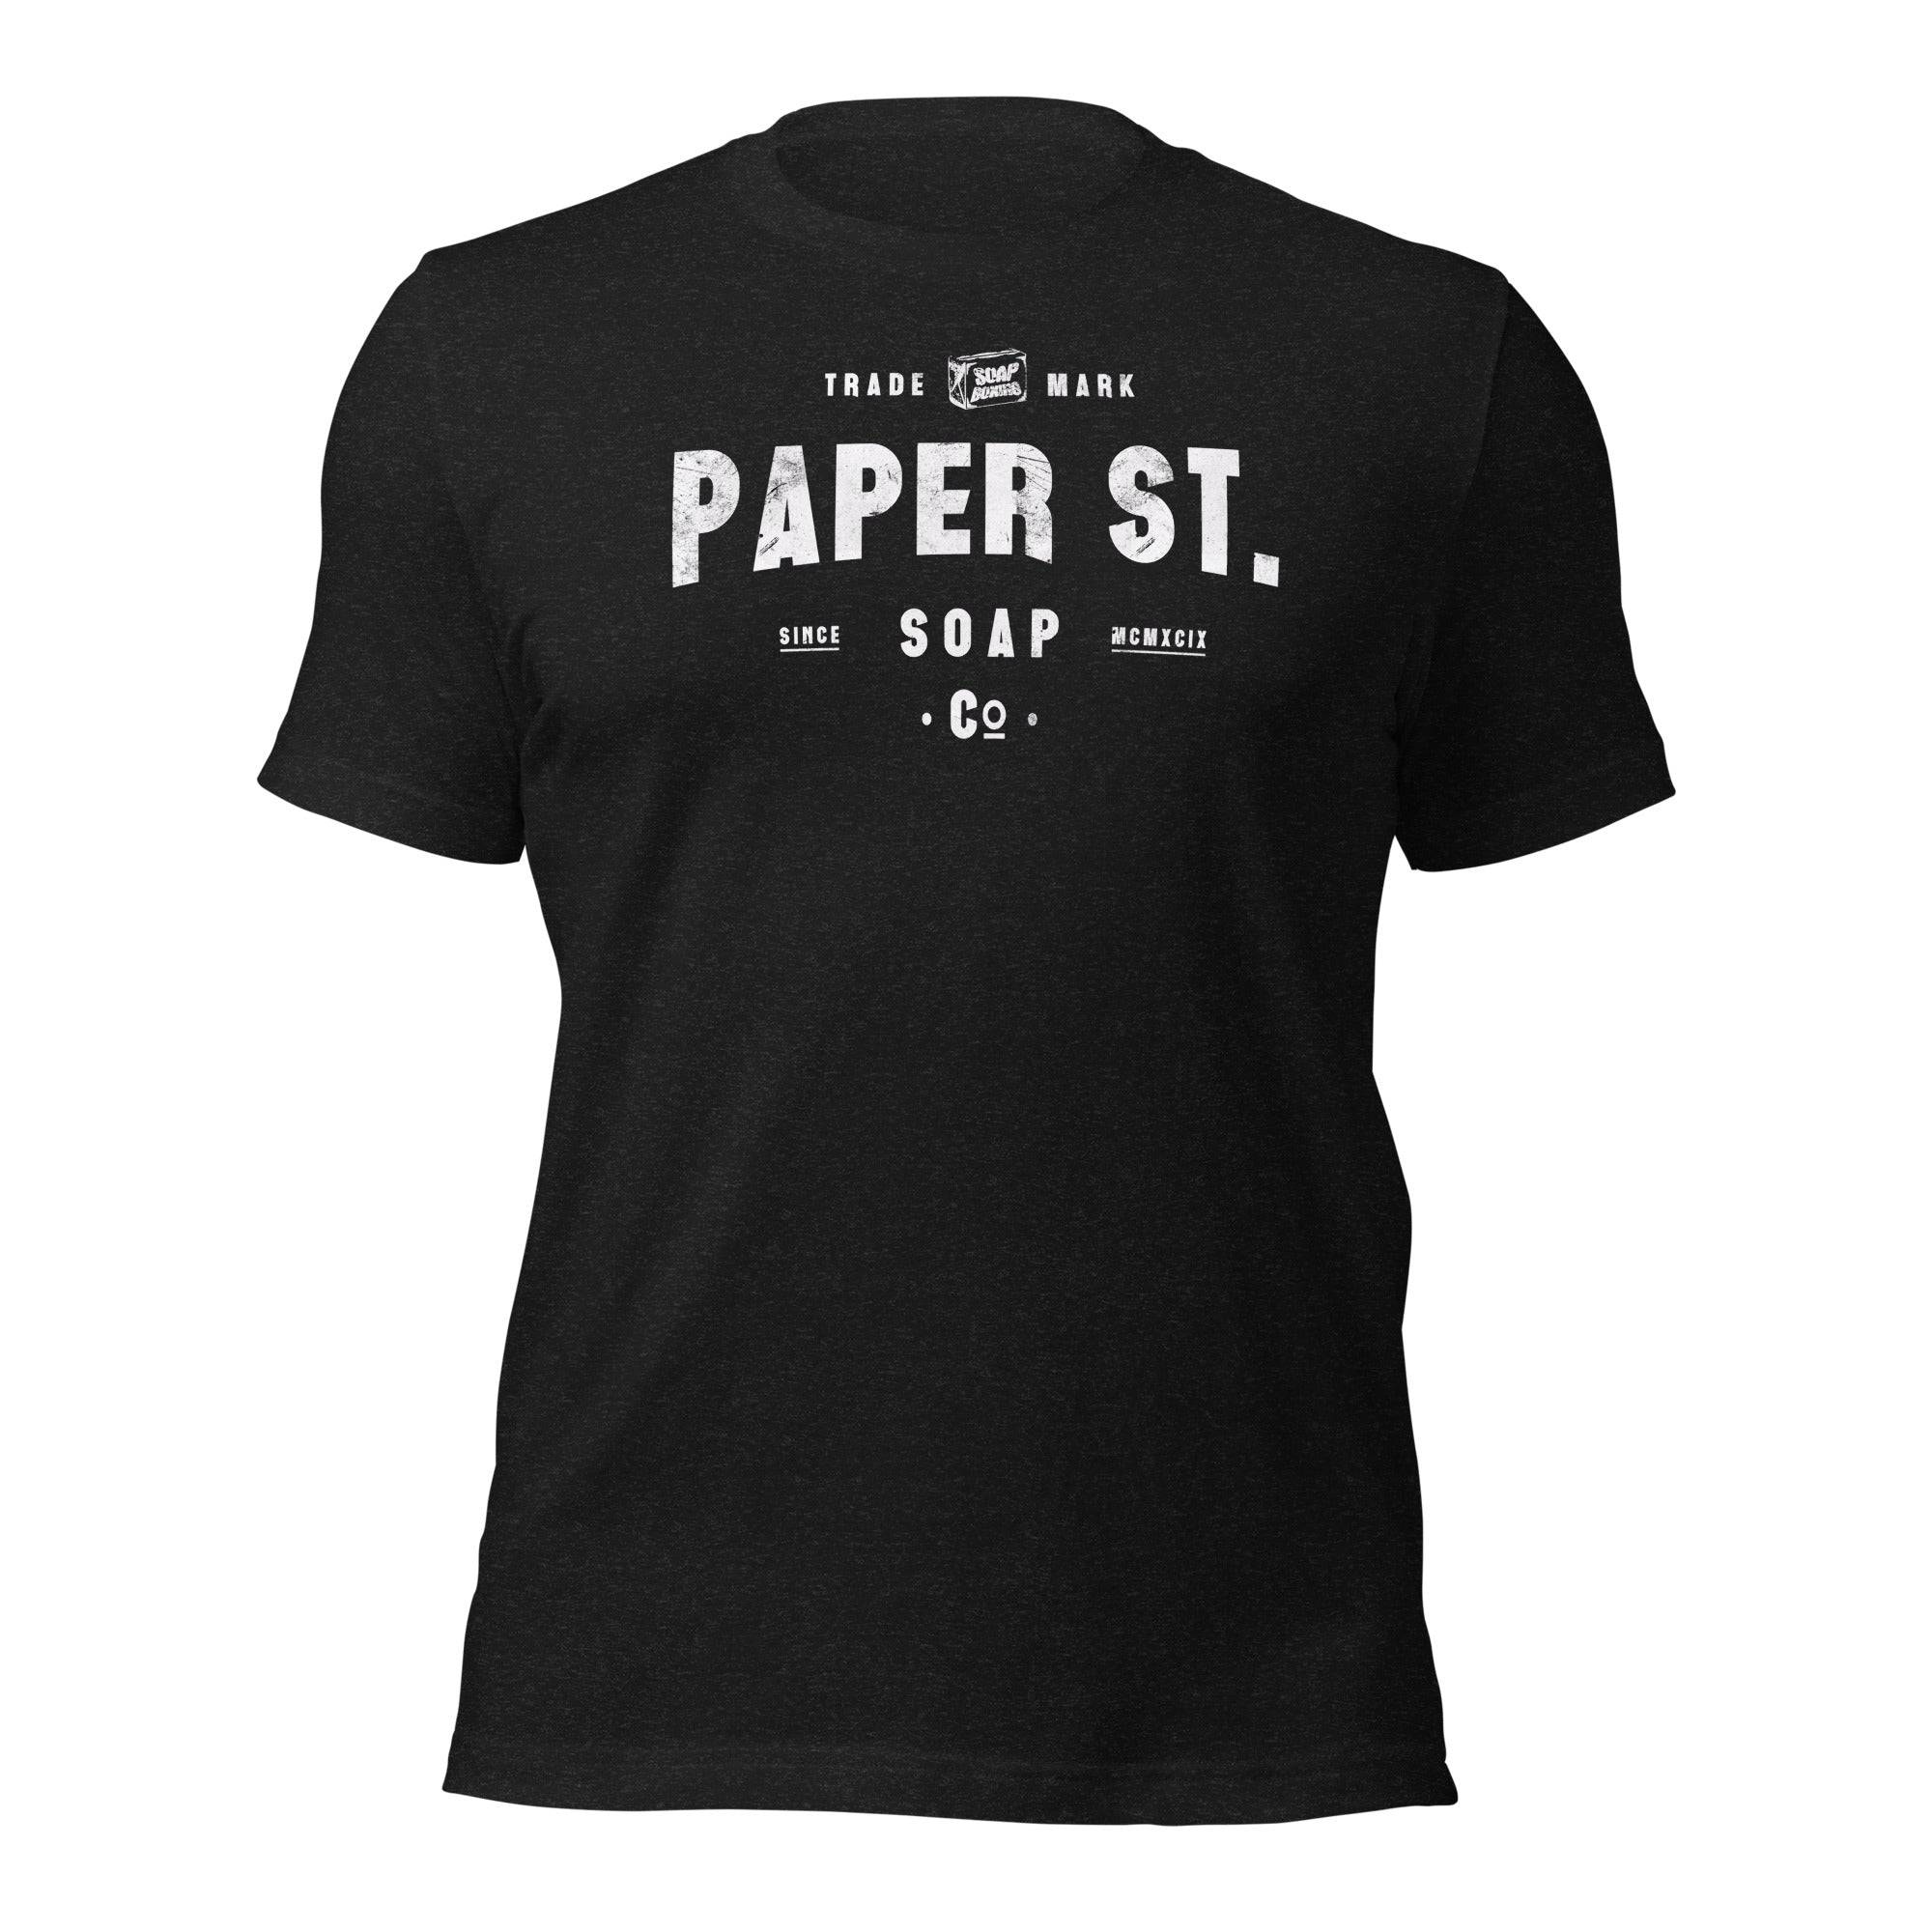 a black t - shirt that says paper st soap